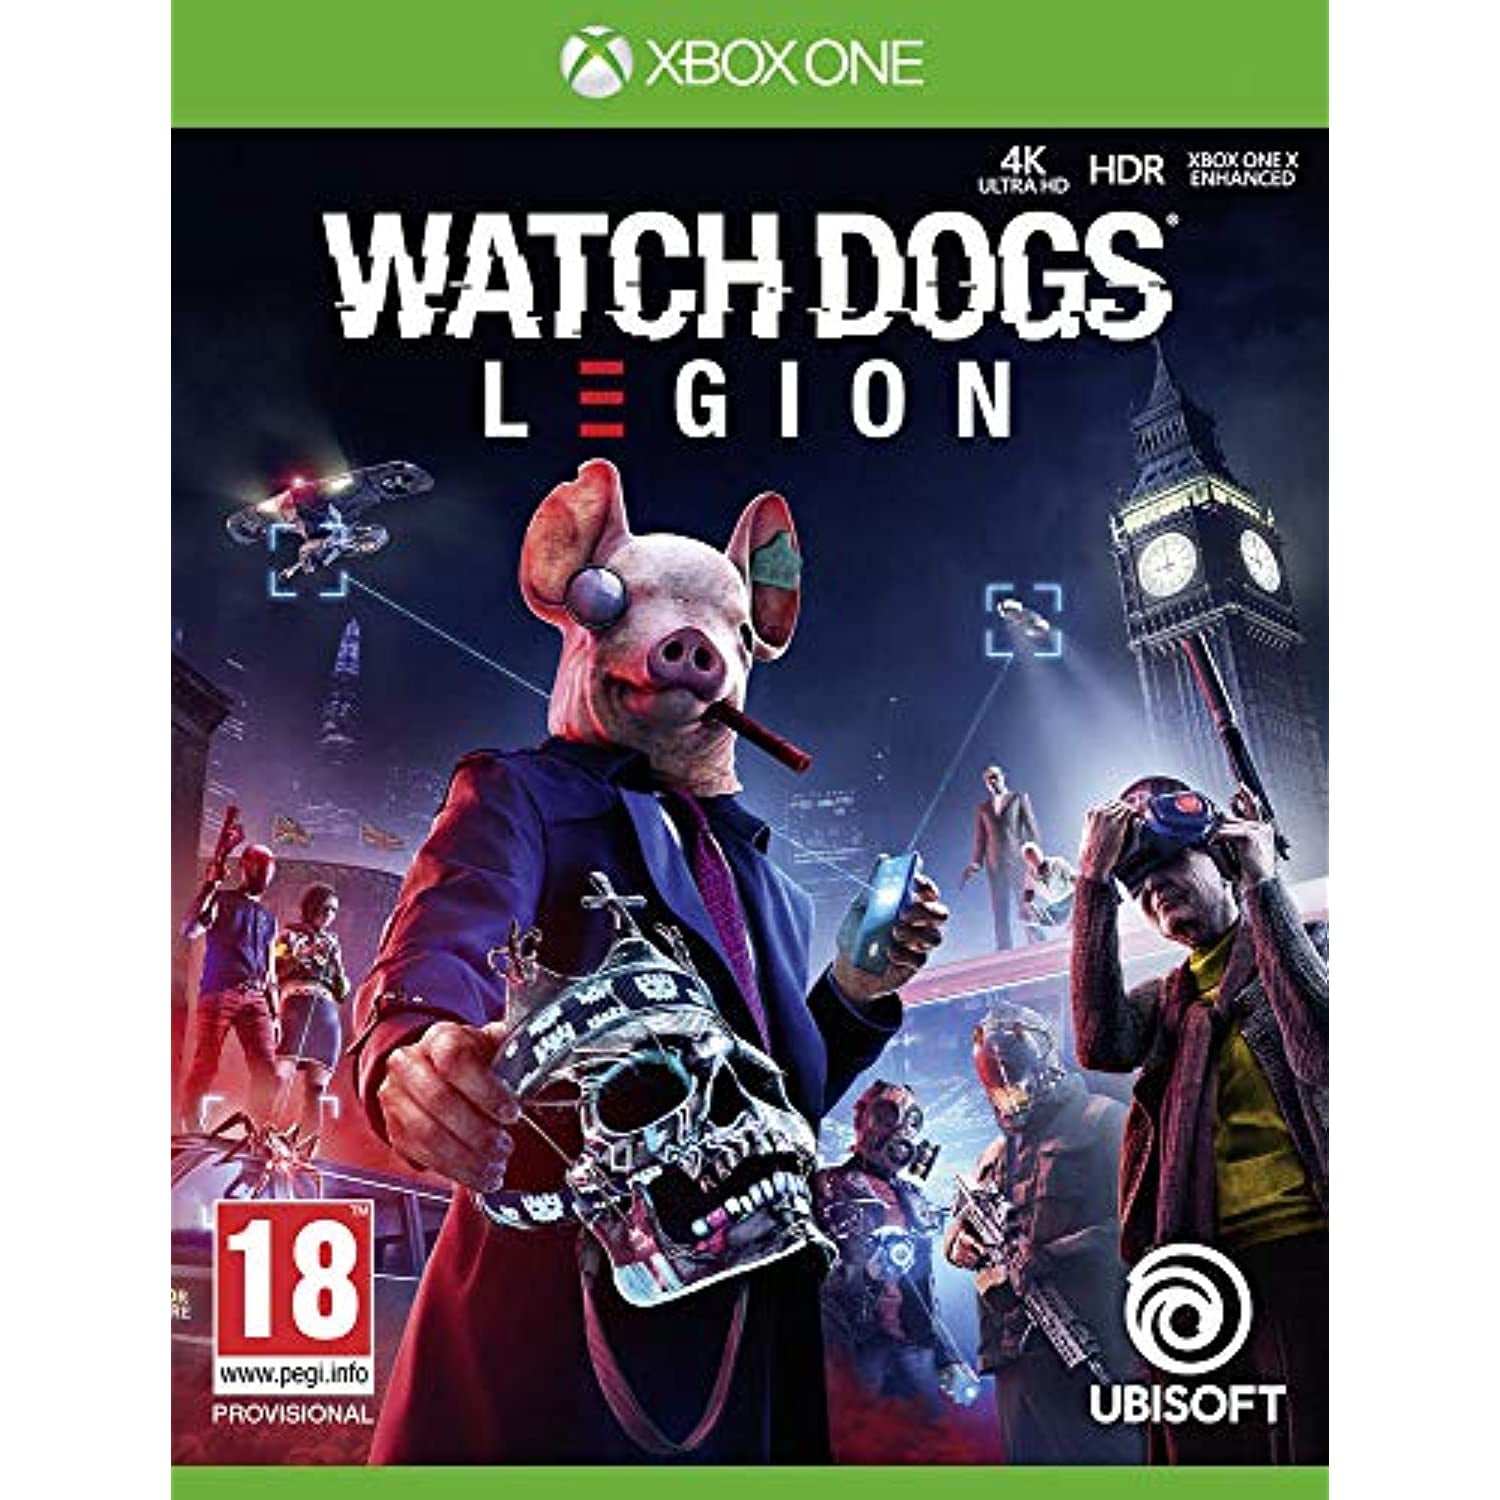 Ubisoft ps5. Ps4 watch Dogs Legion. Watch Dogs диск ps4. Вотч догс Легион иксбокс. Watch Dogs Xbox one.